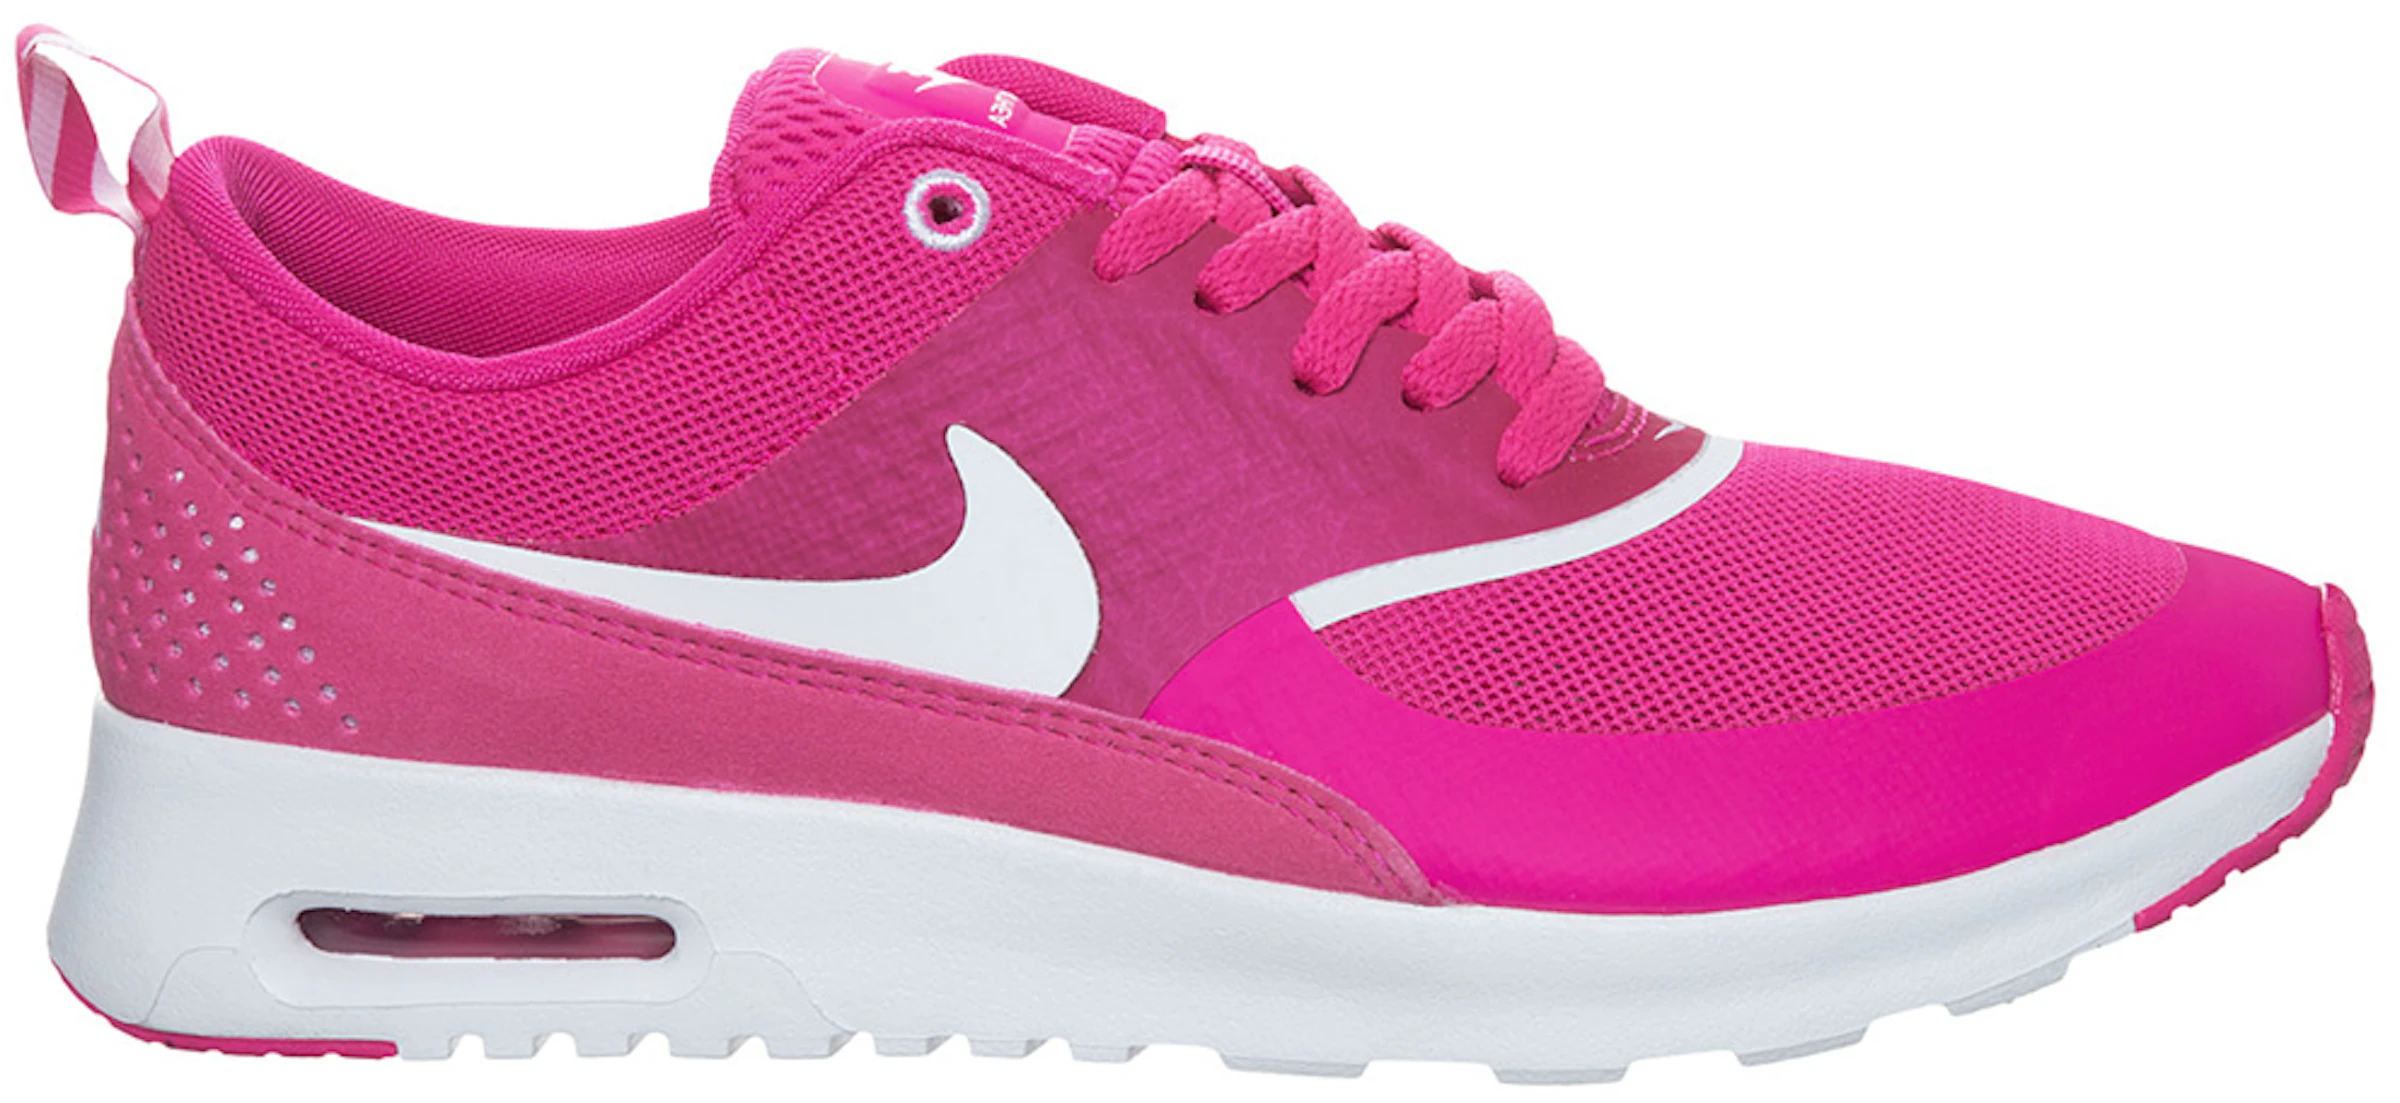 Nike Air Max Pink White (W) 599409-602 -